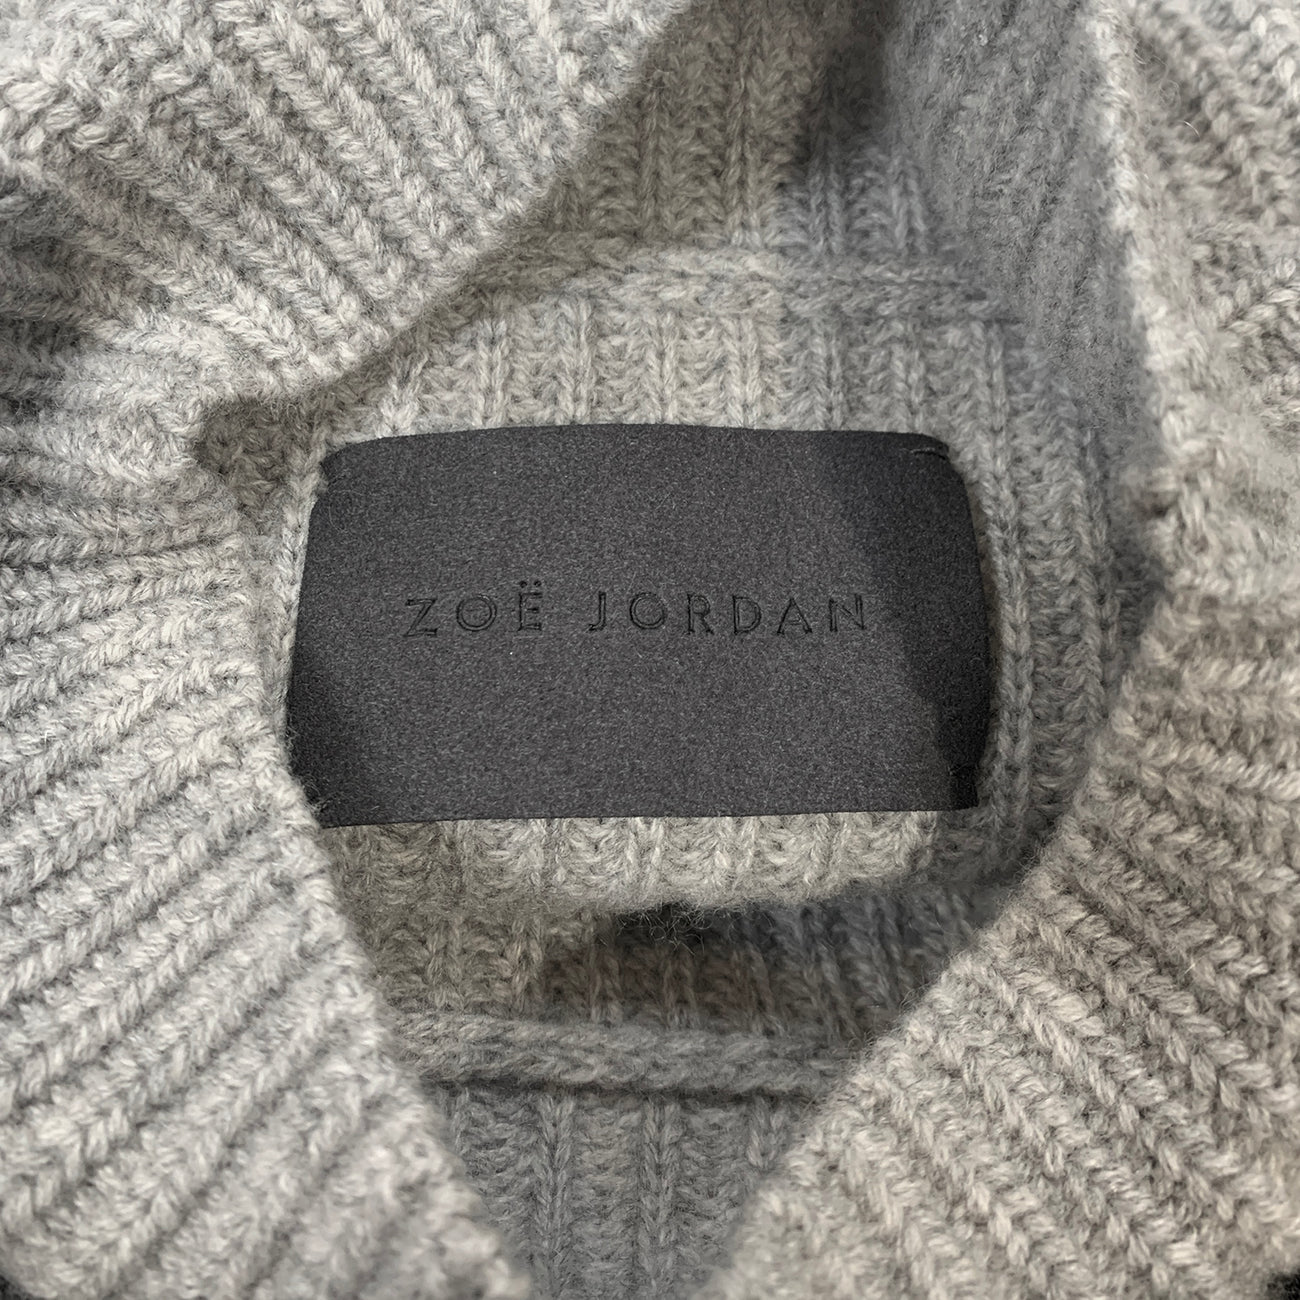 Zoe Jordan Galileo Knit Tunic, $556, farfetch.com